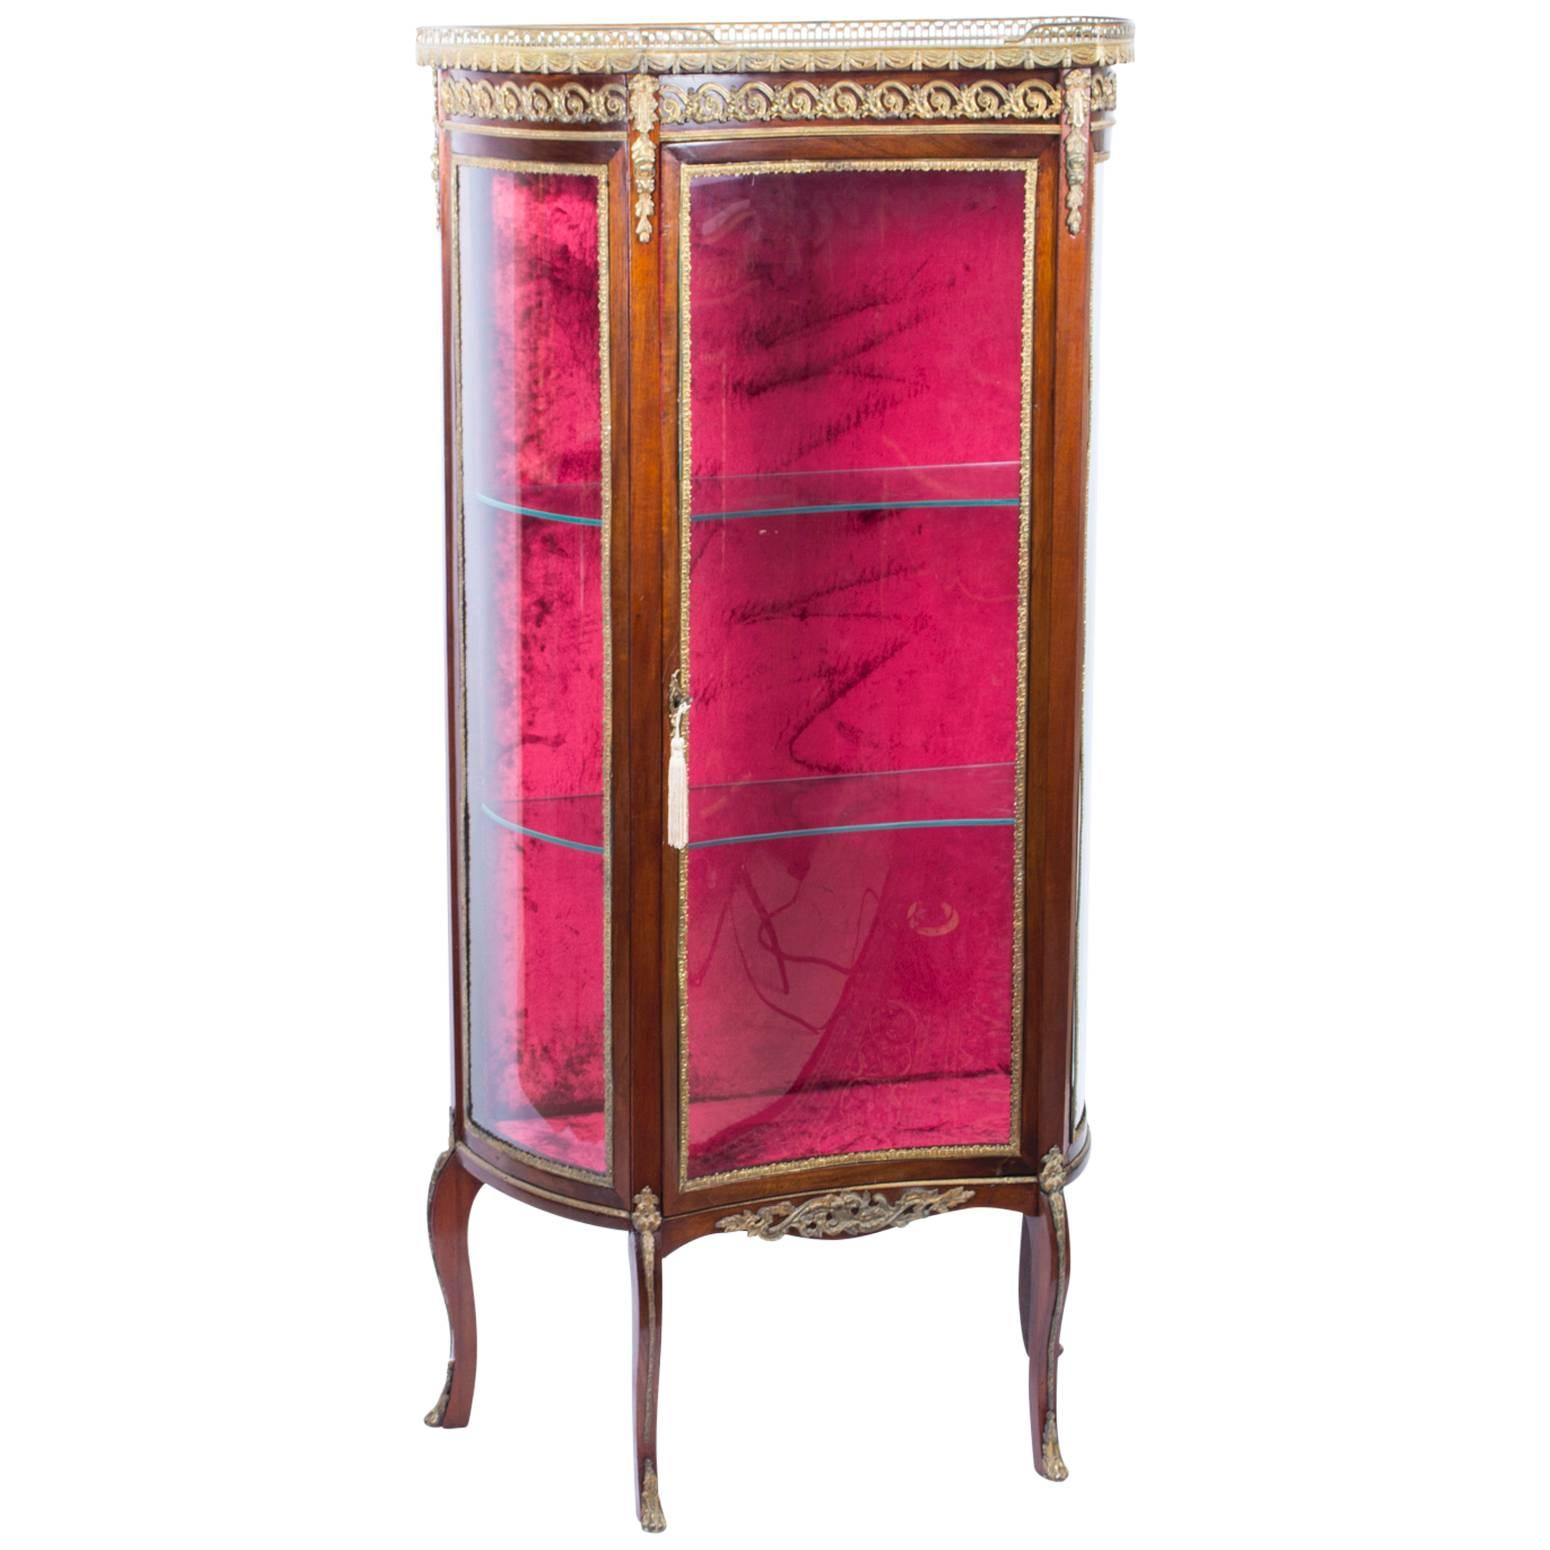 Antique French Mahogany Louis Revival Display Cabinet, circa 1880